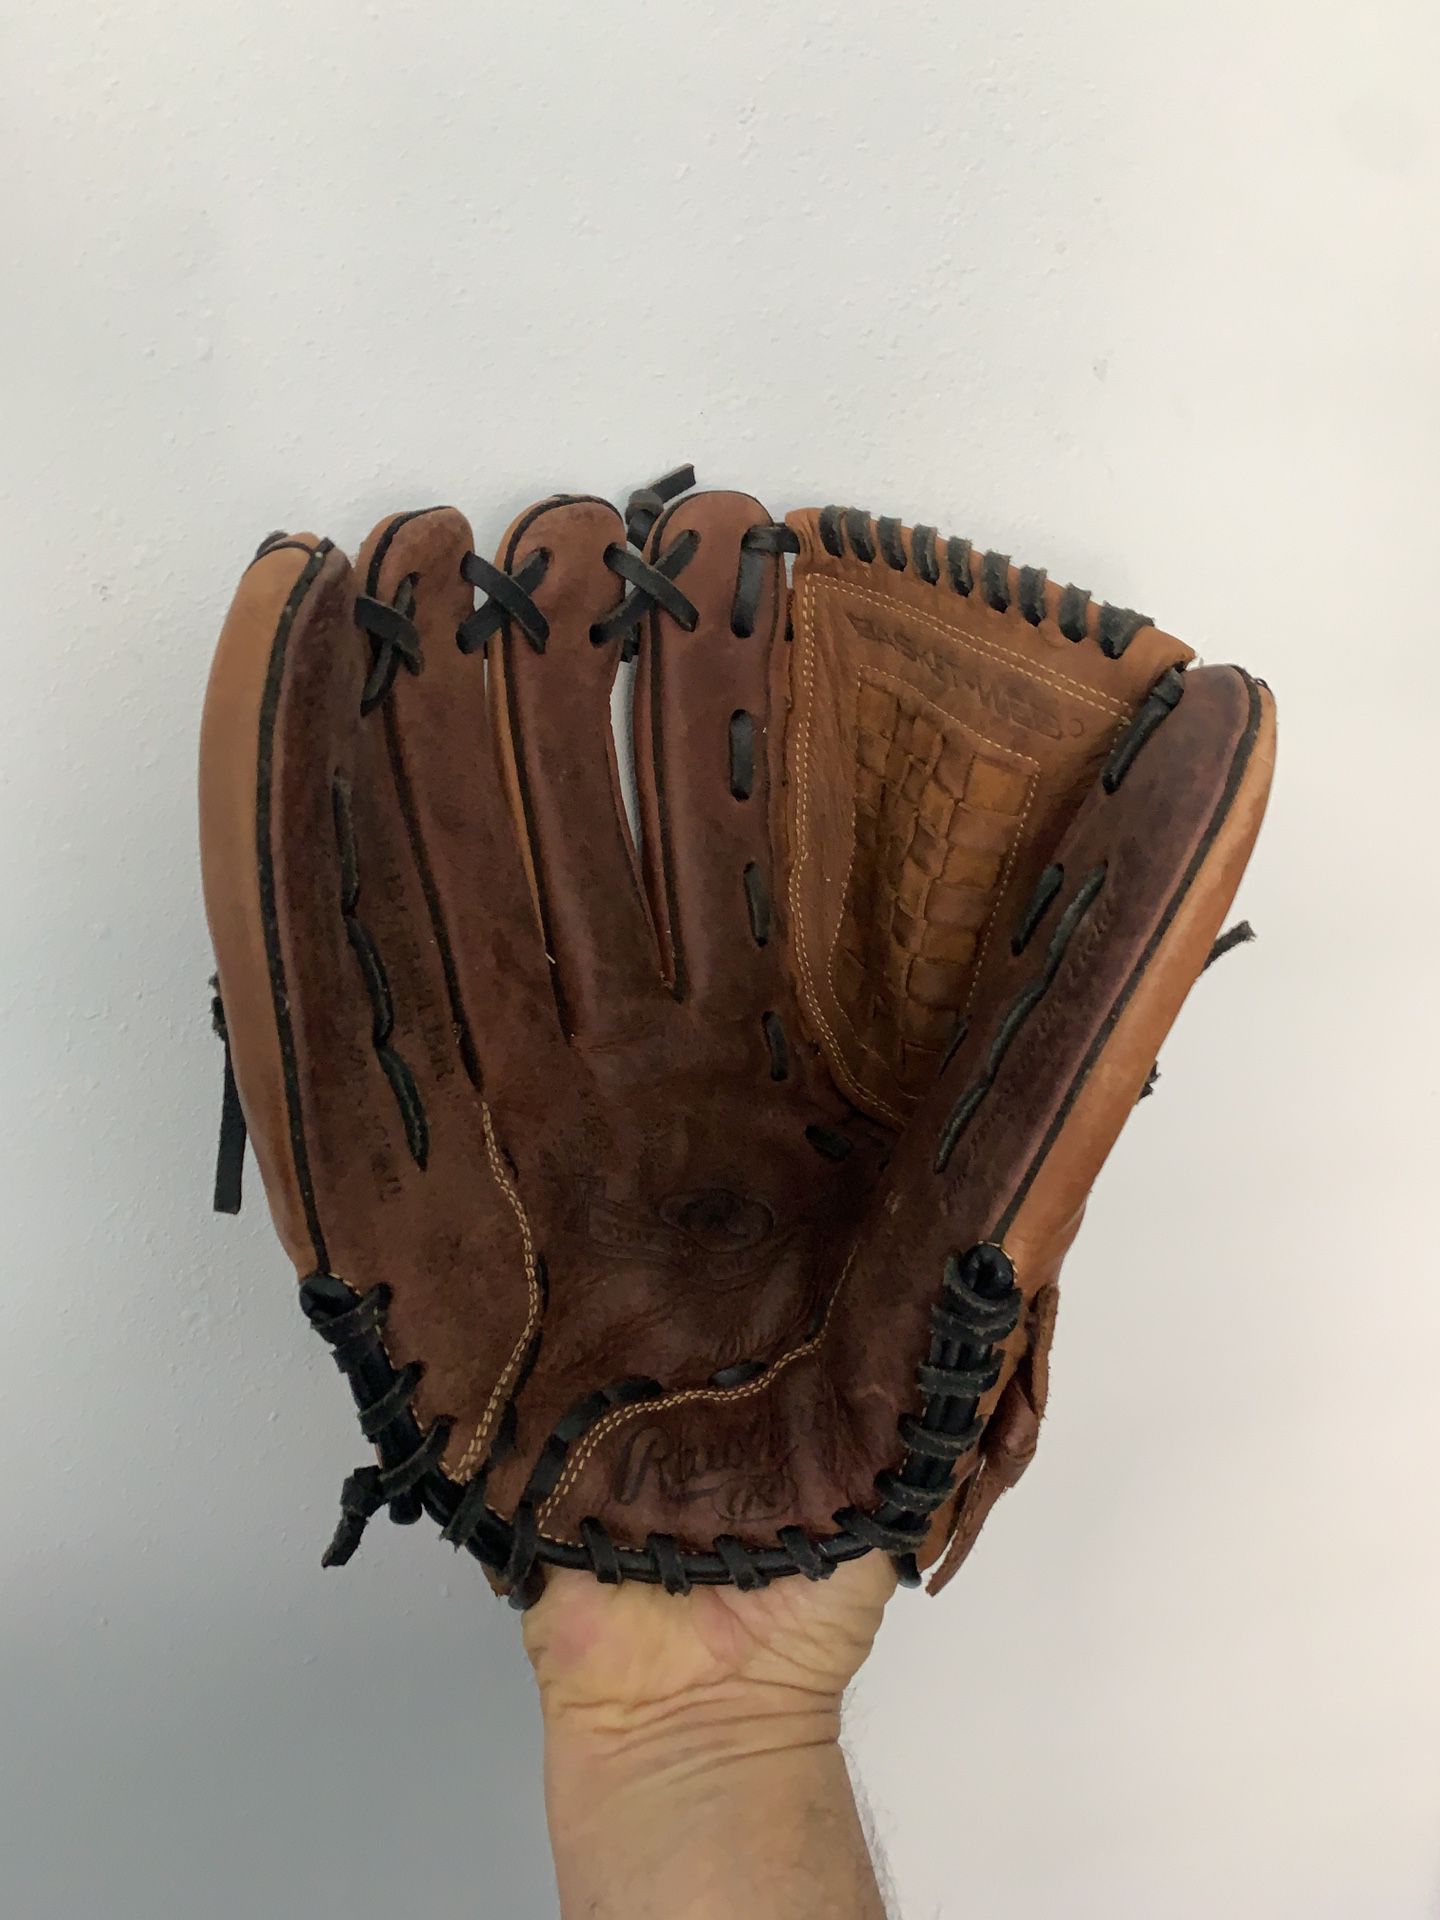 Rawlings RBG36TBR Left Hand Baseball Glove